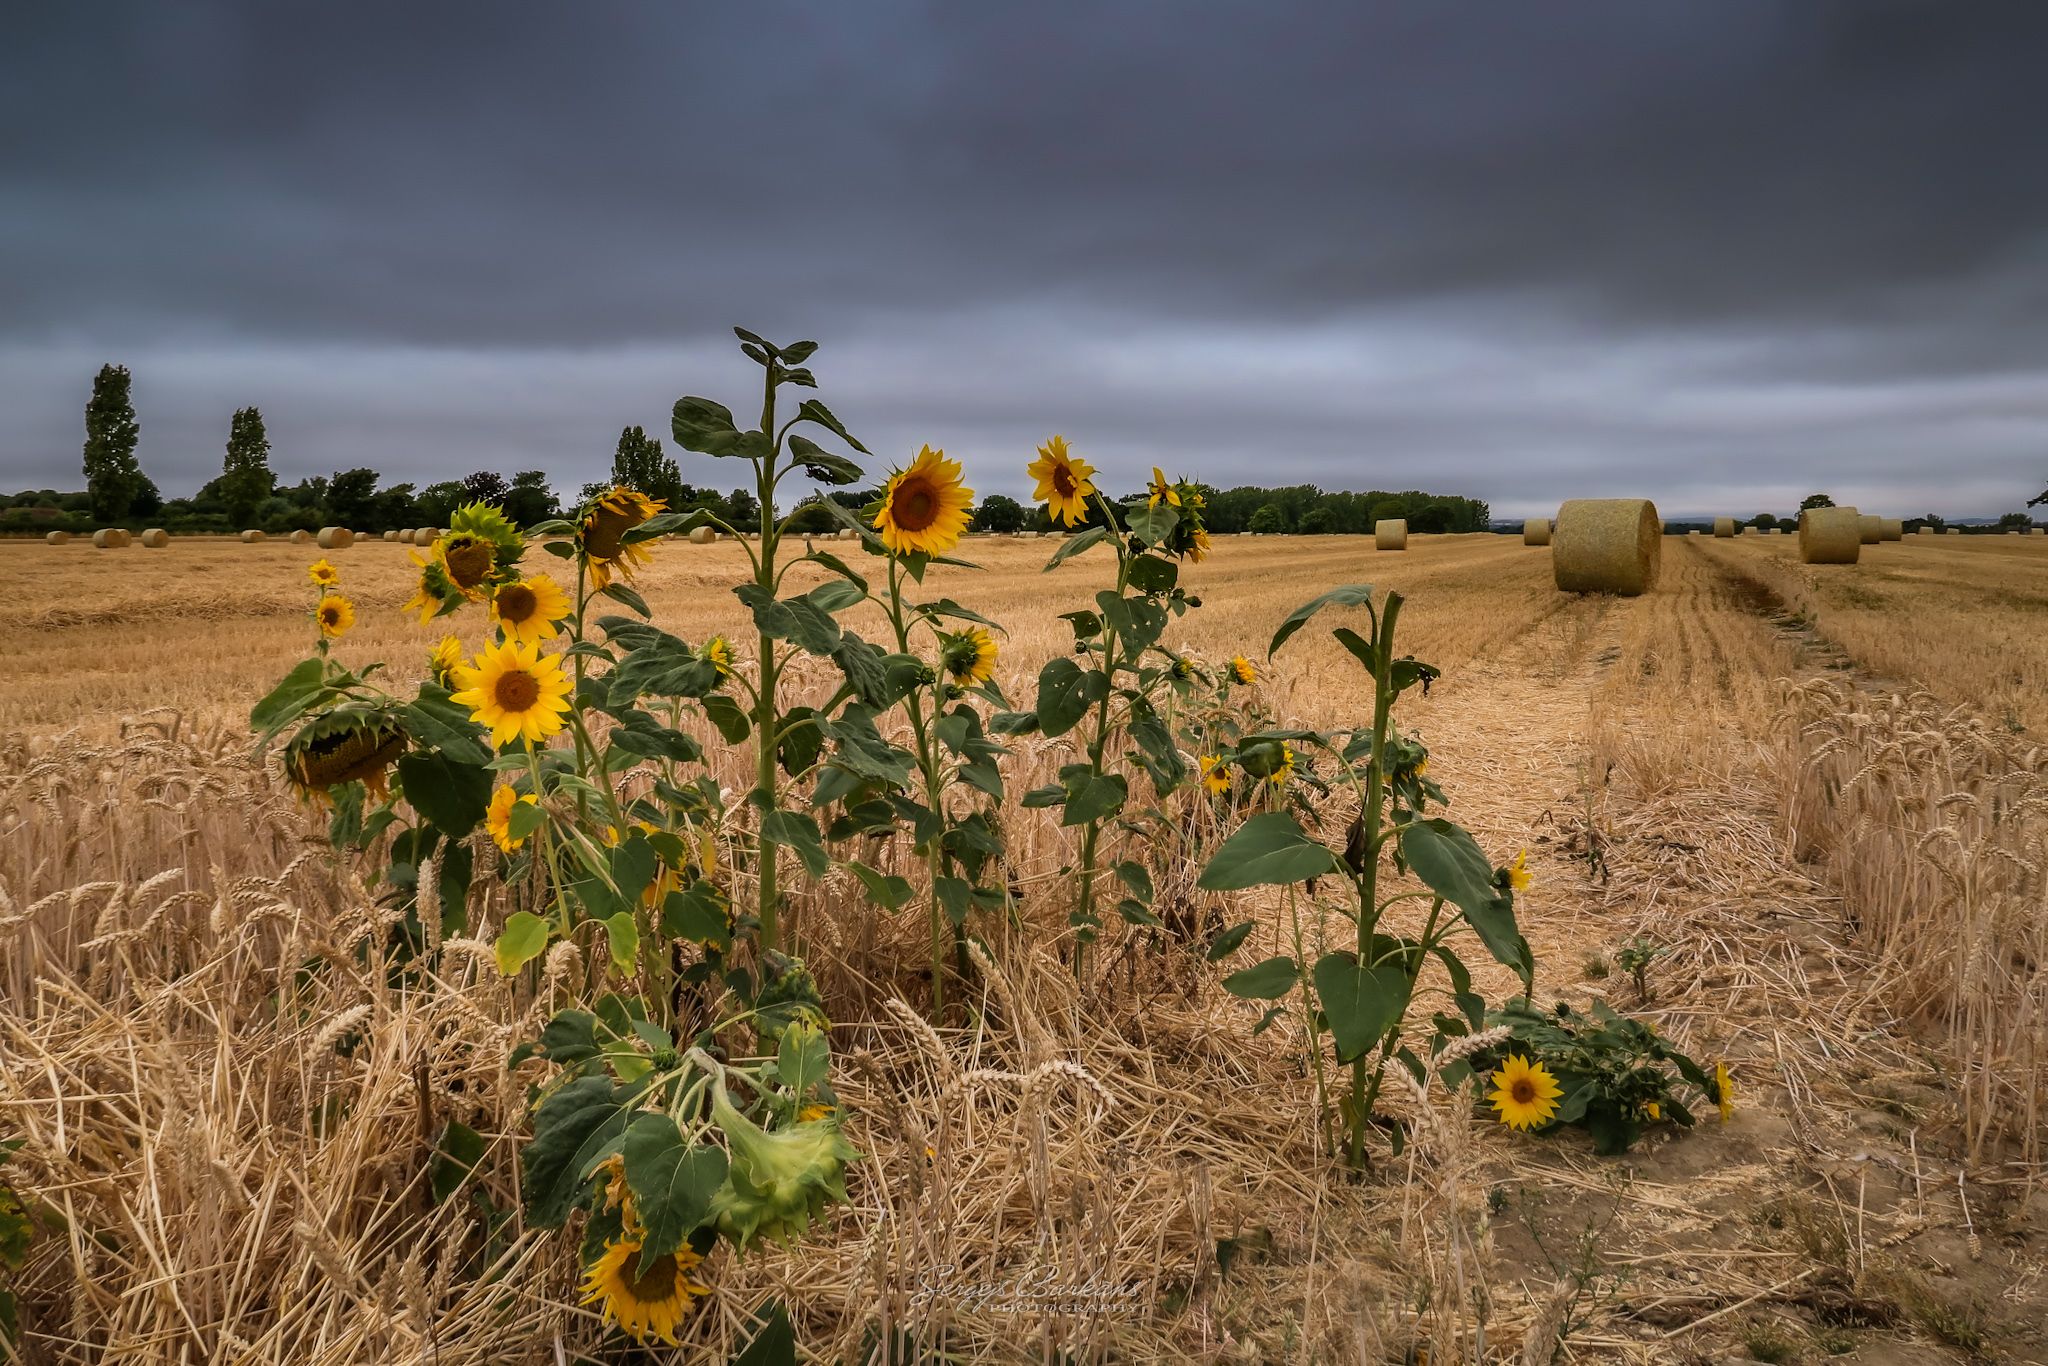 #haylingisland #wheatfield #wheat #sunflower #fall #summer #nature, Sergejs Barkans